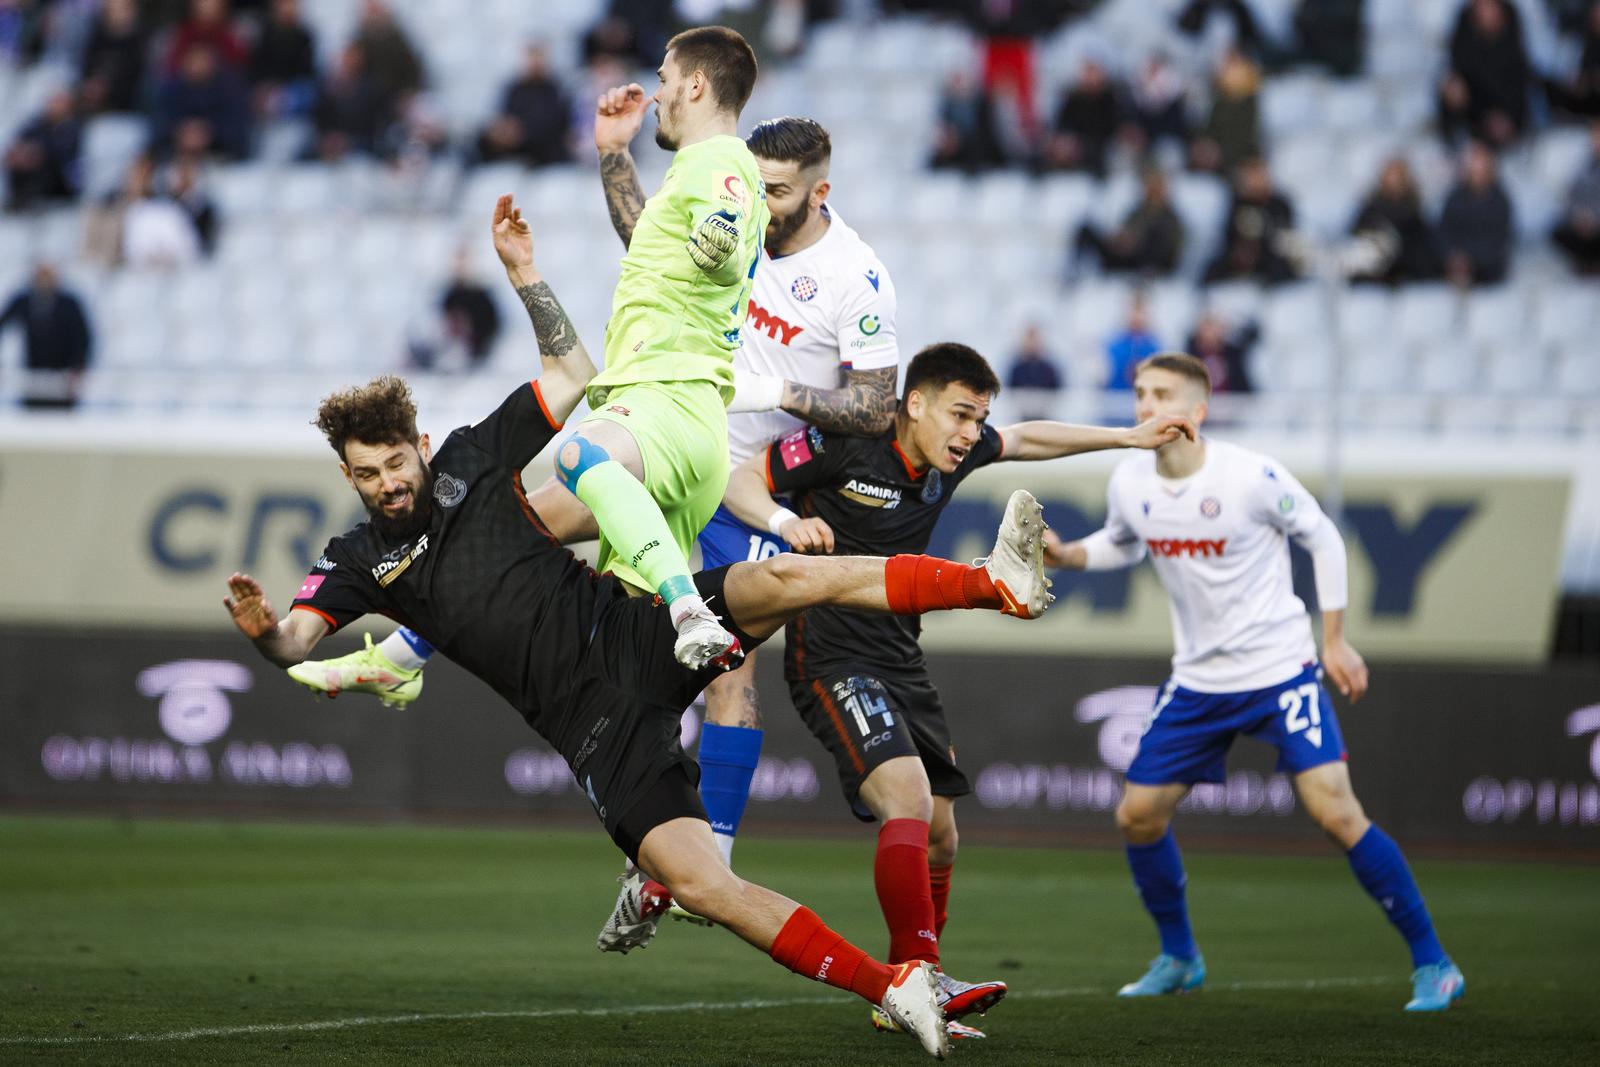 Poraz u polufinalu Kupa: Hajduk - Gorica 2-1